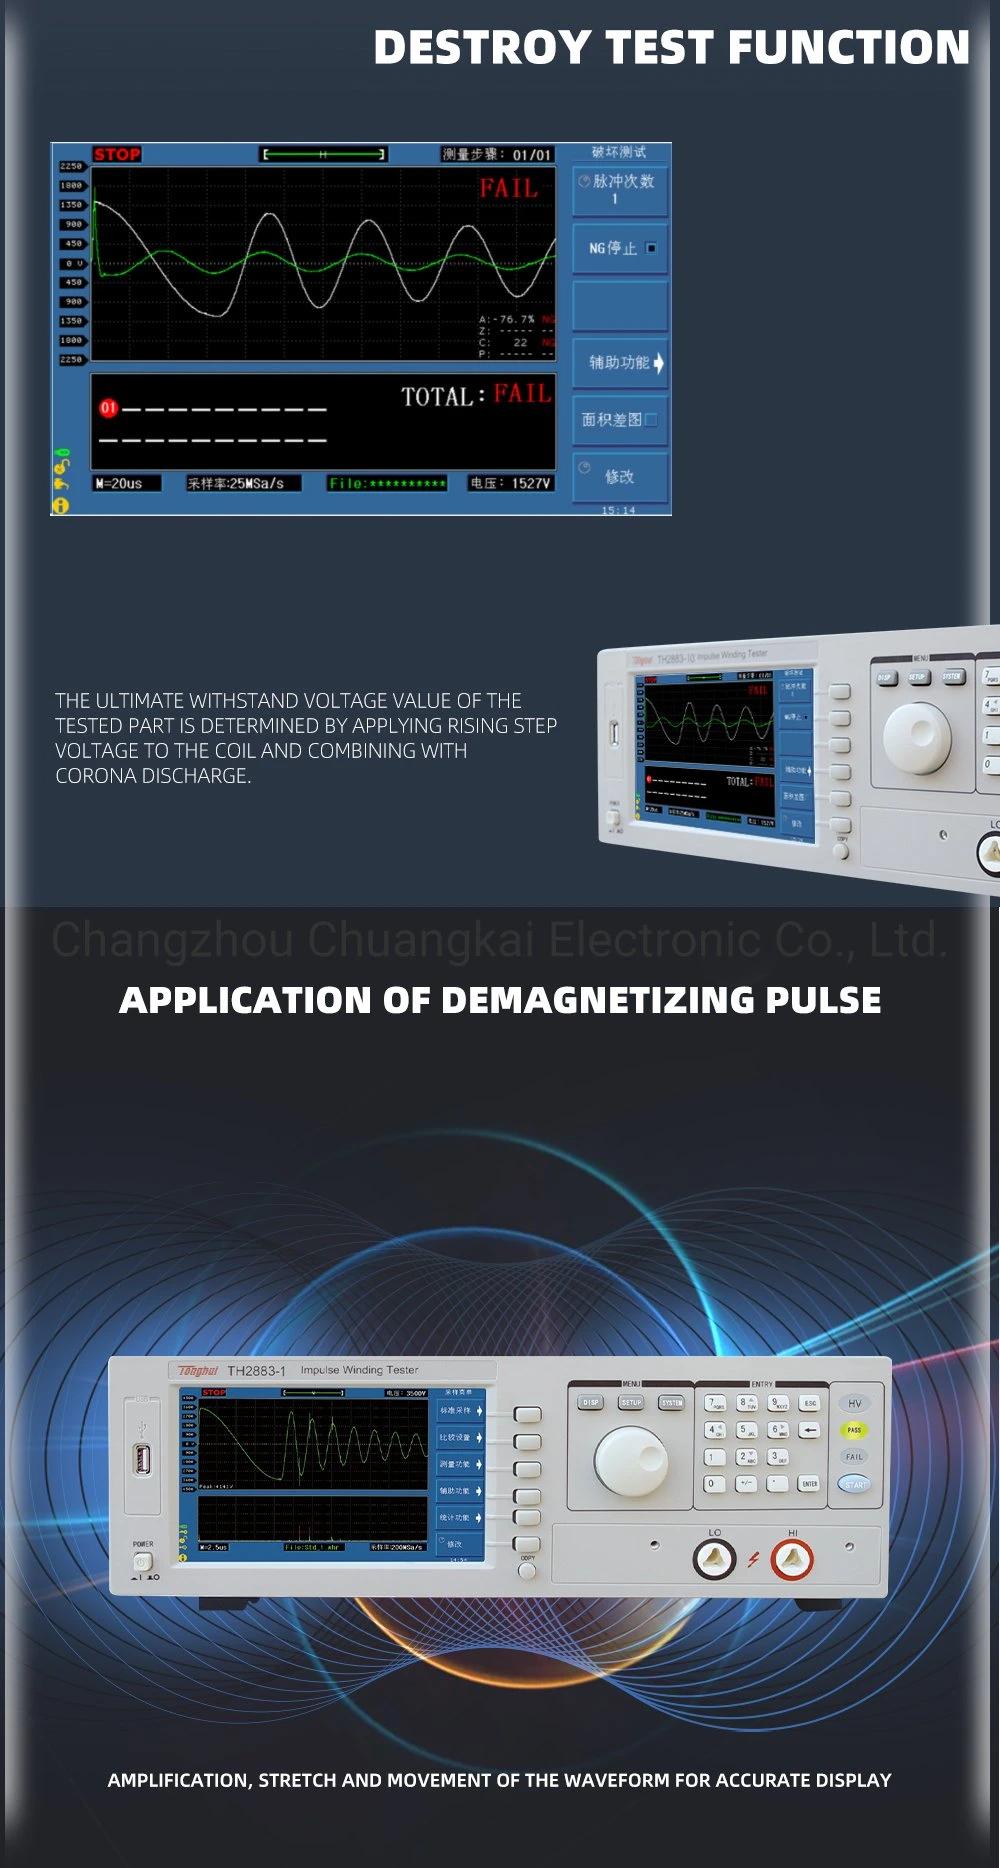 Th2883-10 Impulse Voltage 500V-10kv 20V Steps Impulse Winding Measuring Instrument